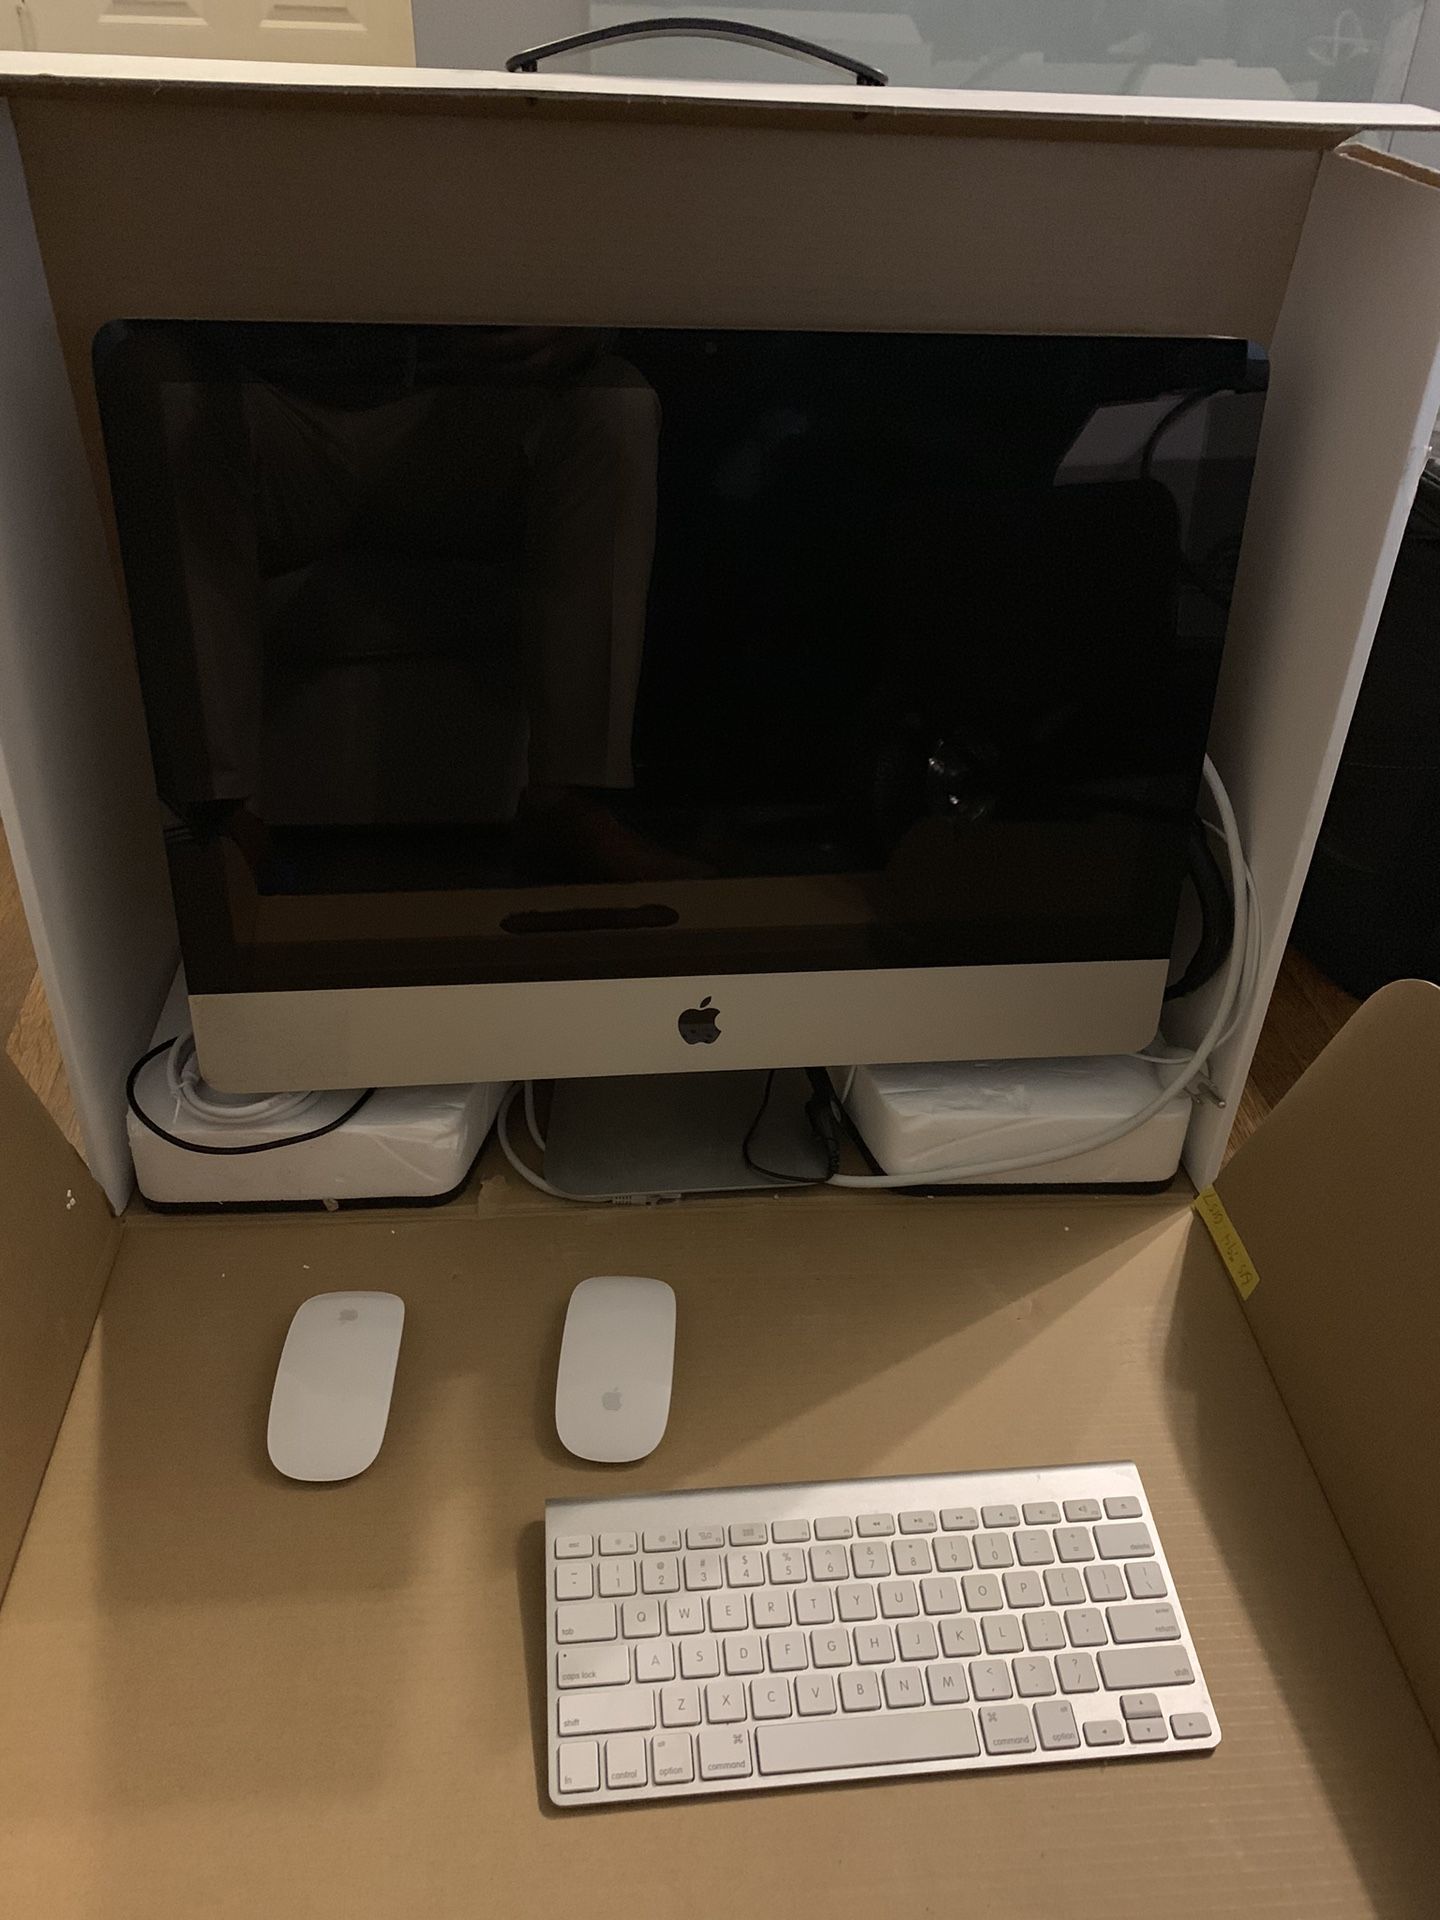 iMac 21.5 wireless mouse/keyboard, printer